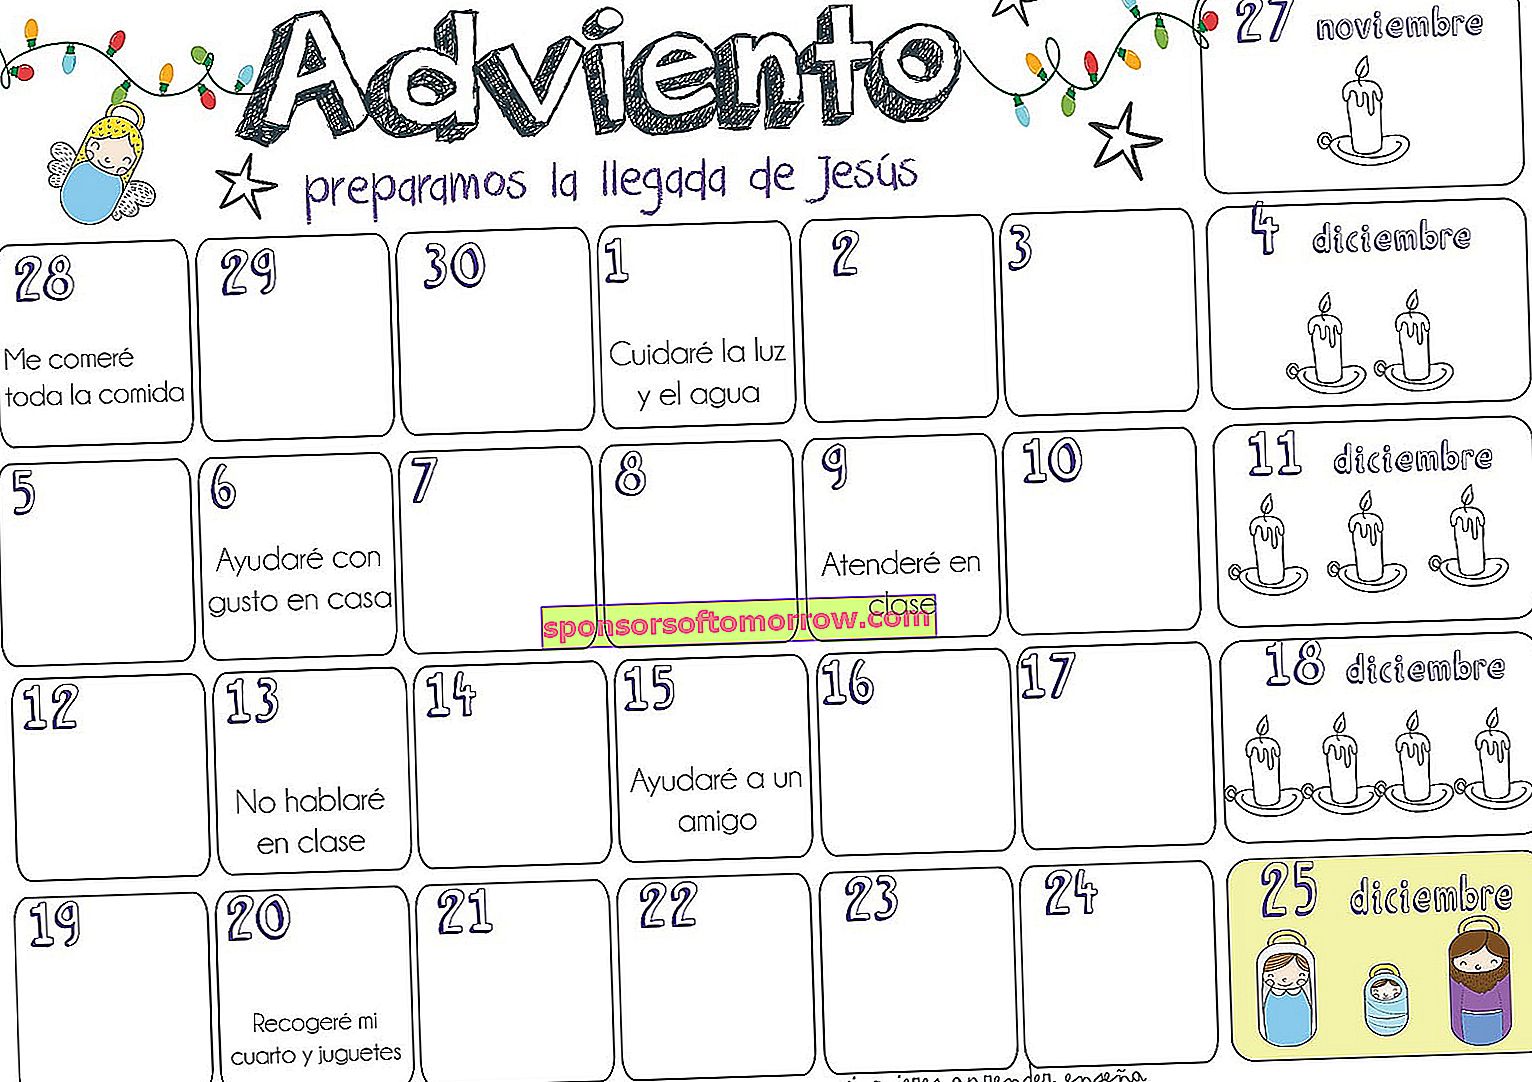 advent-calendar-04